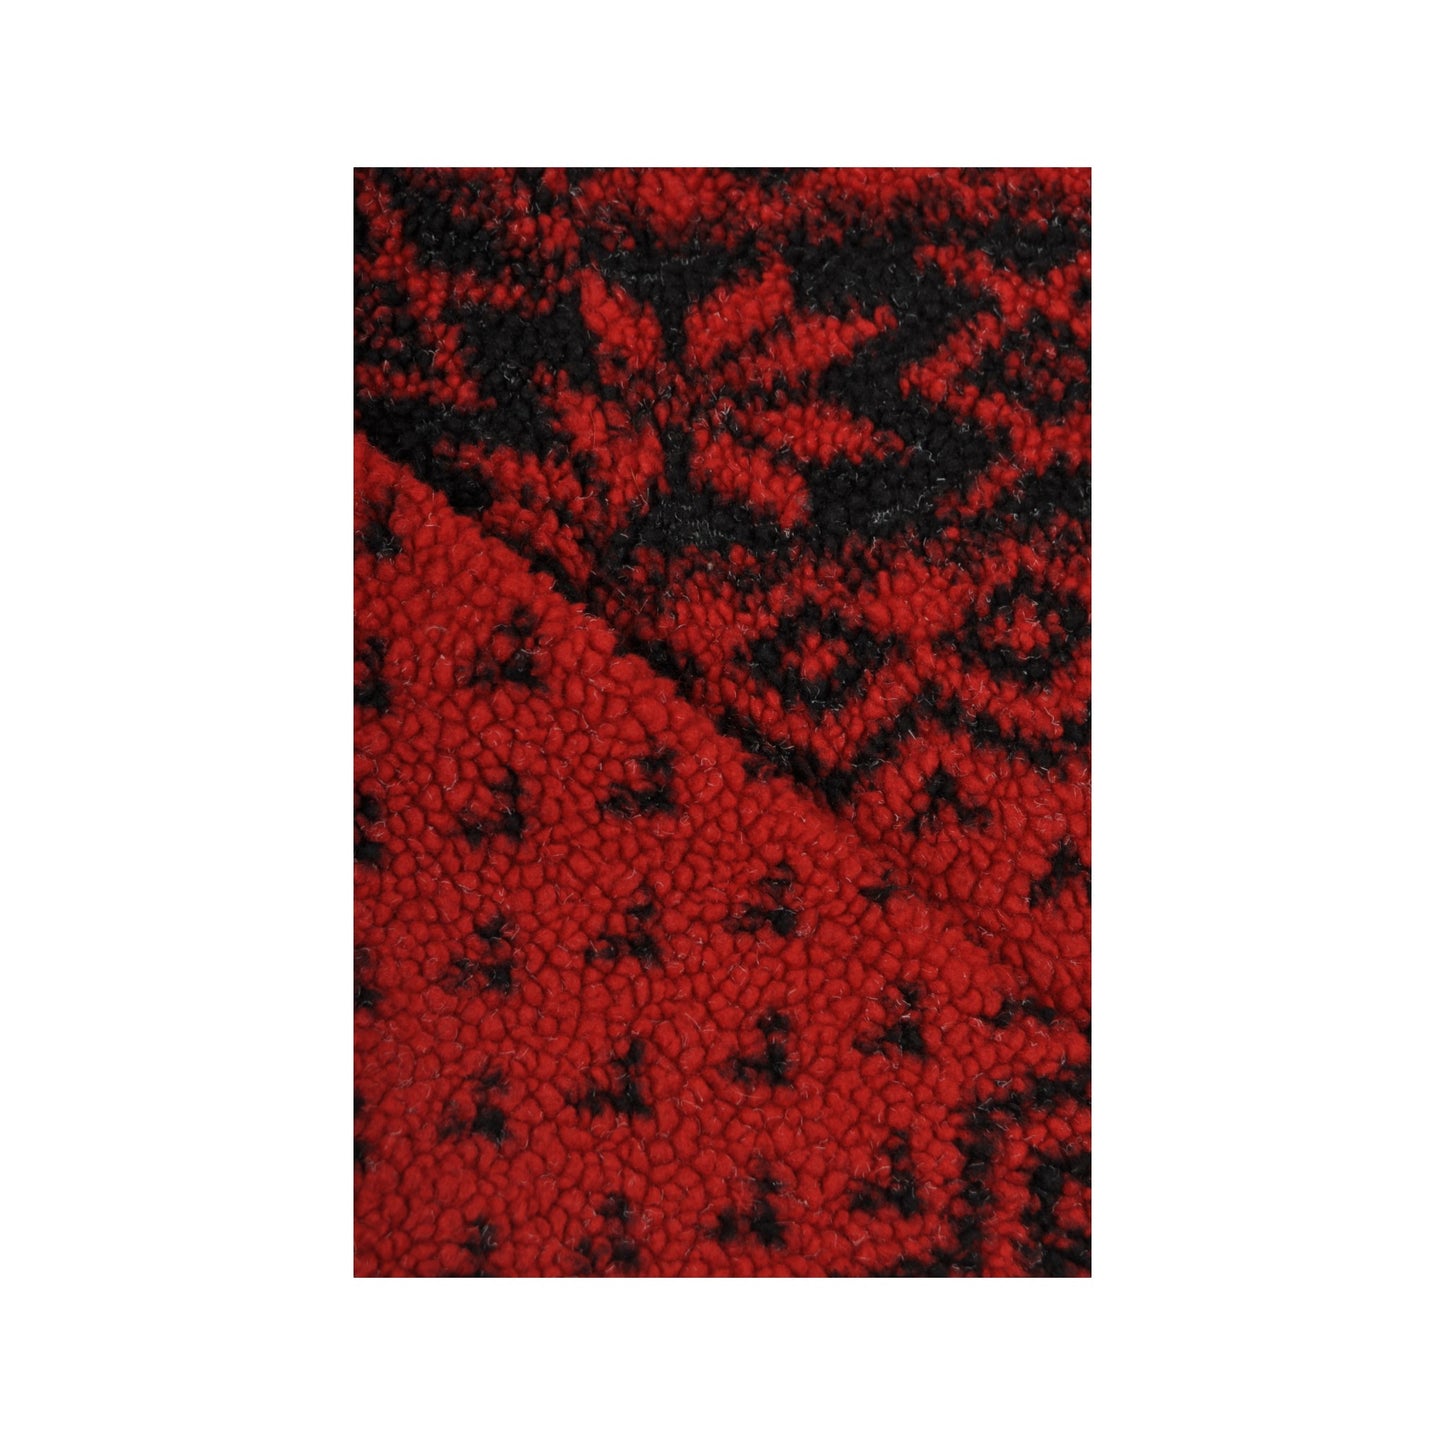 Vintage Fleece 1/4 Zip Retro Pattern Red/Black Ladies Medium